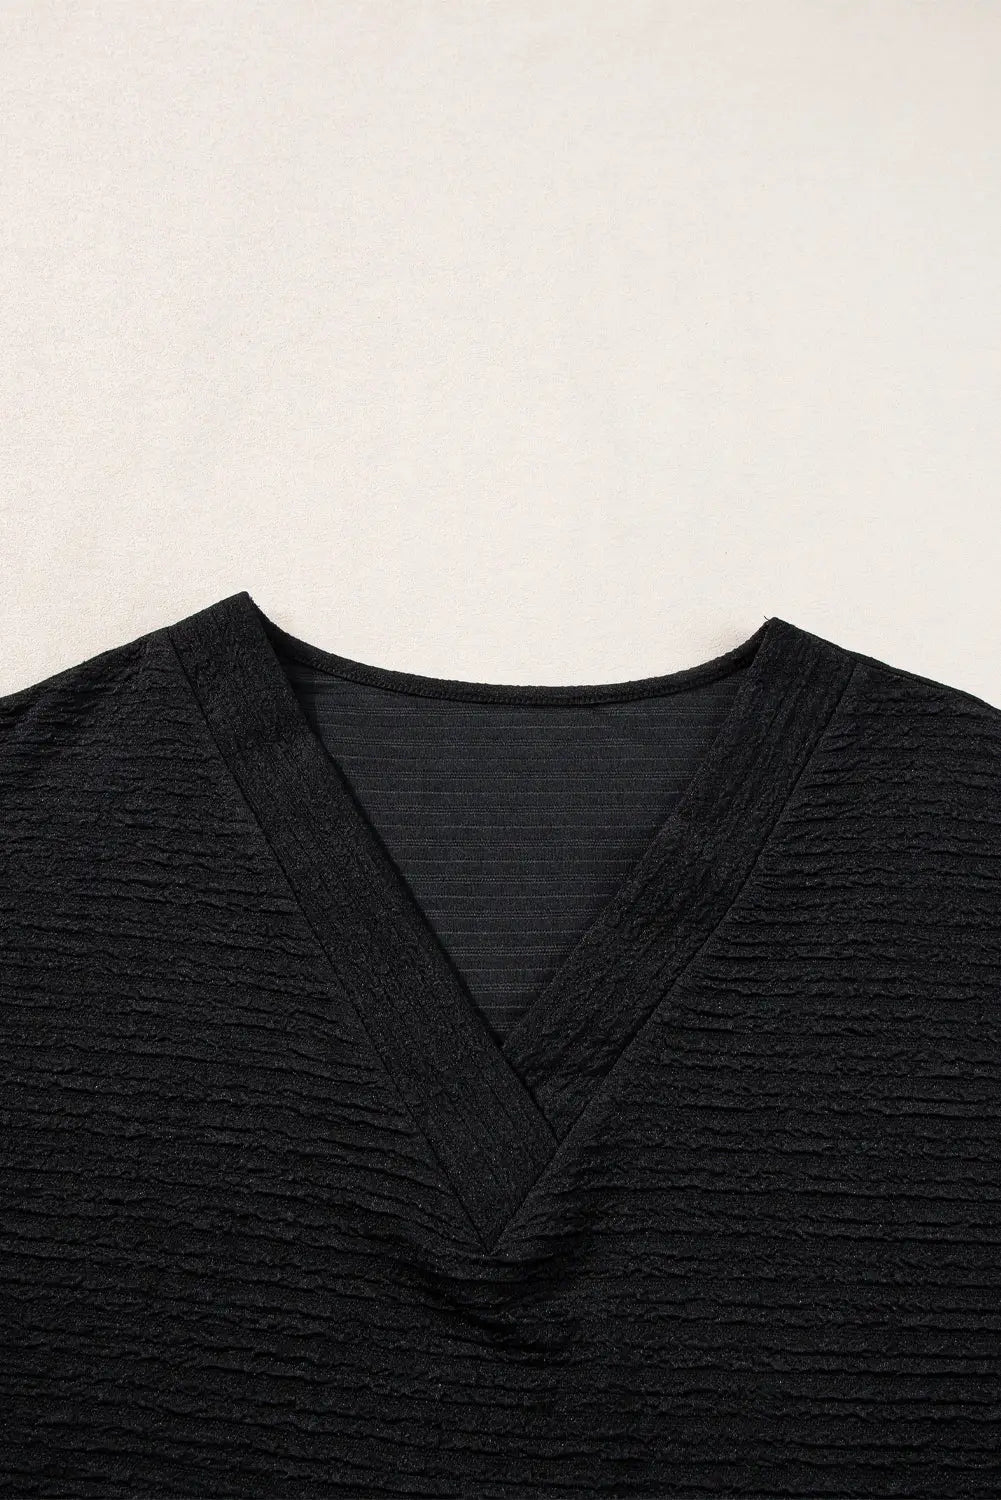 Beauty in black t shirt - tops/tops & tees